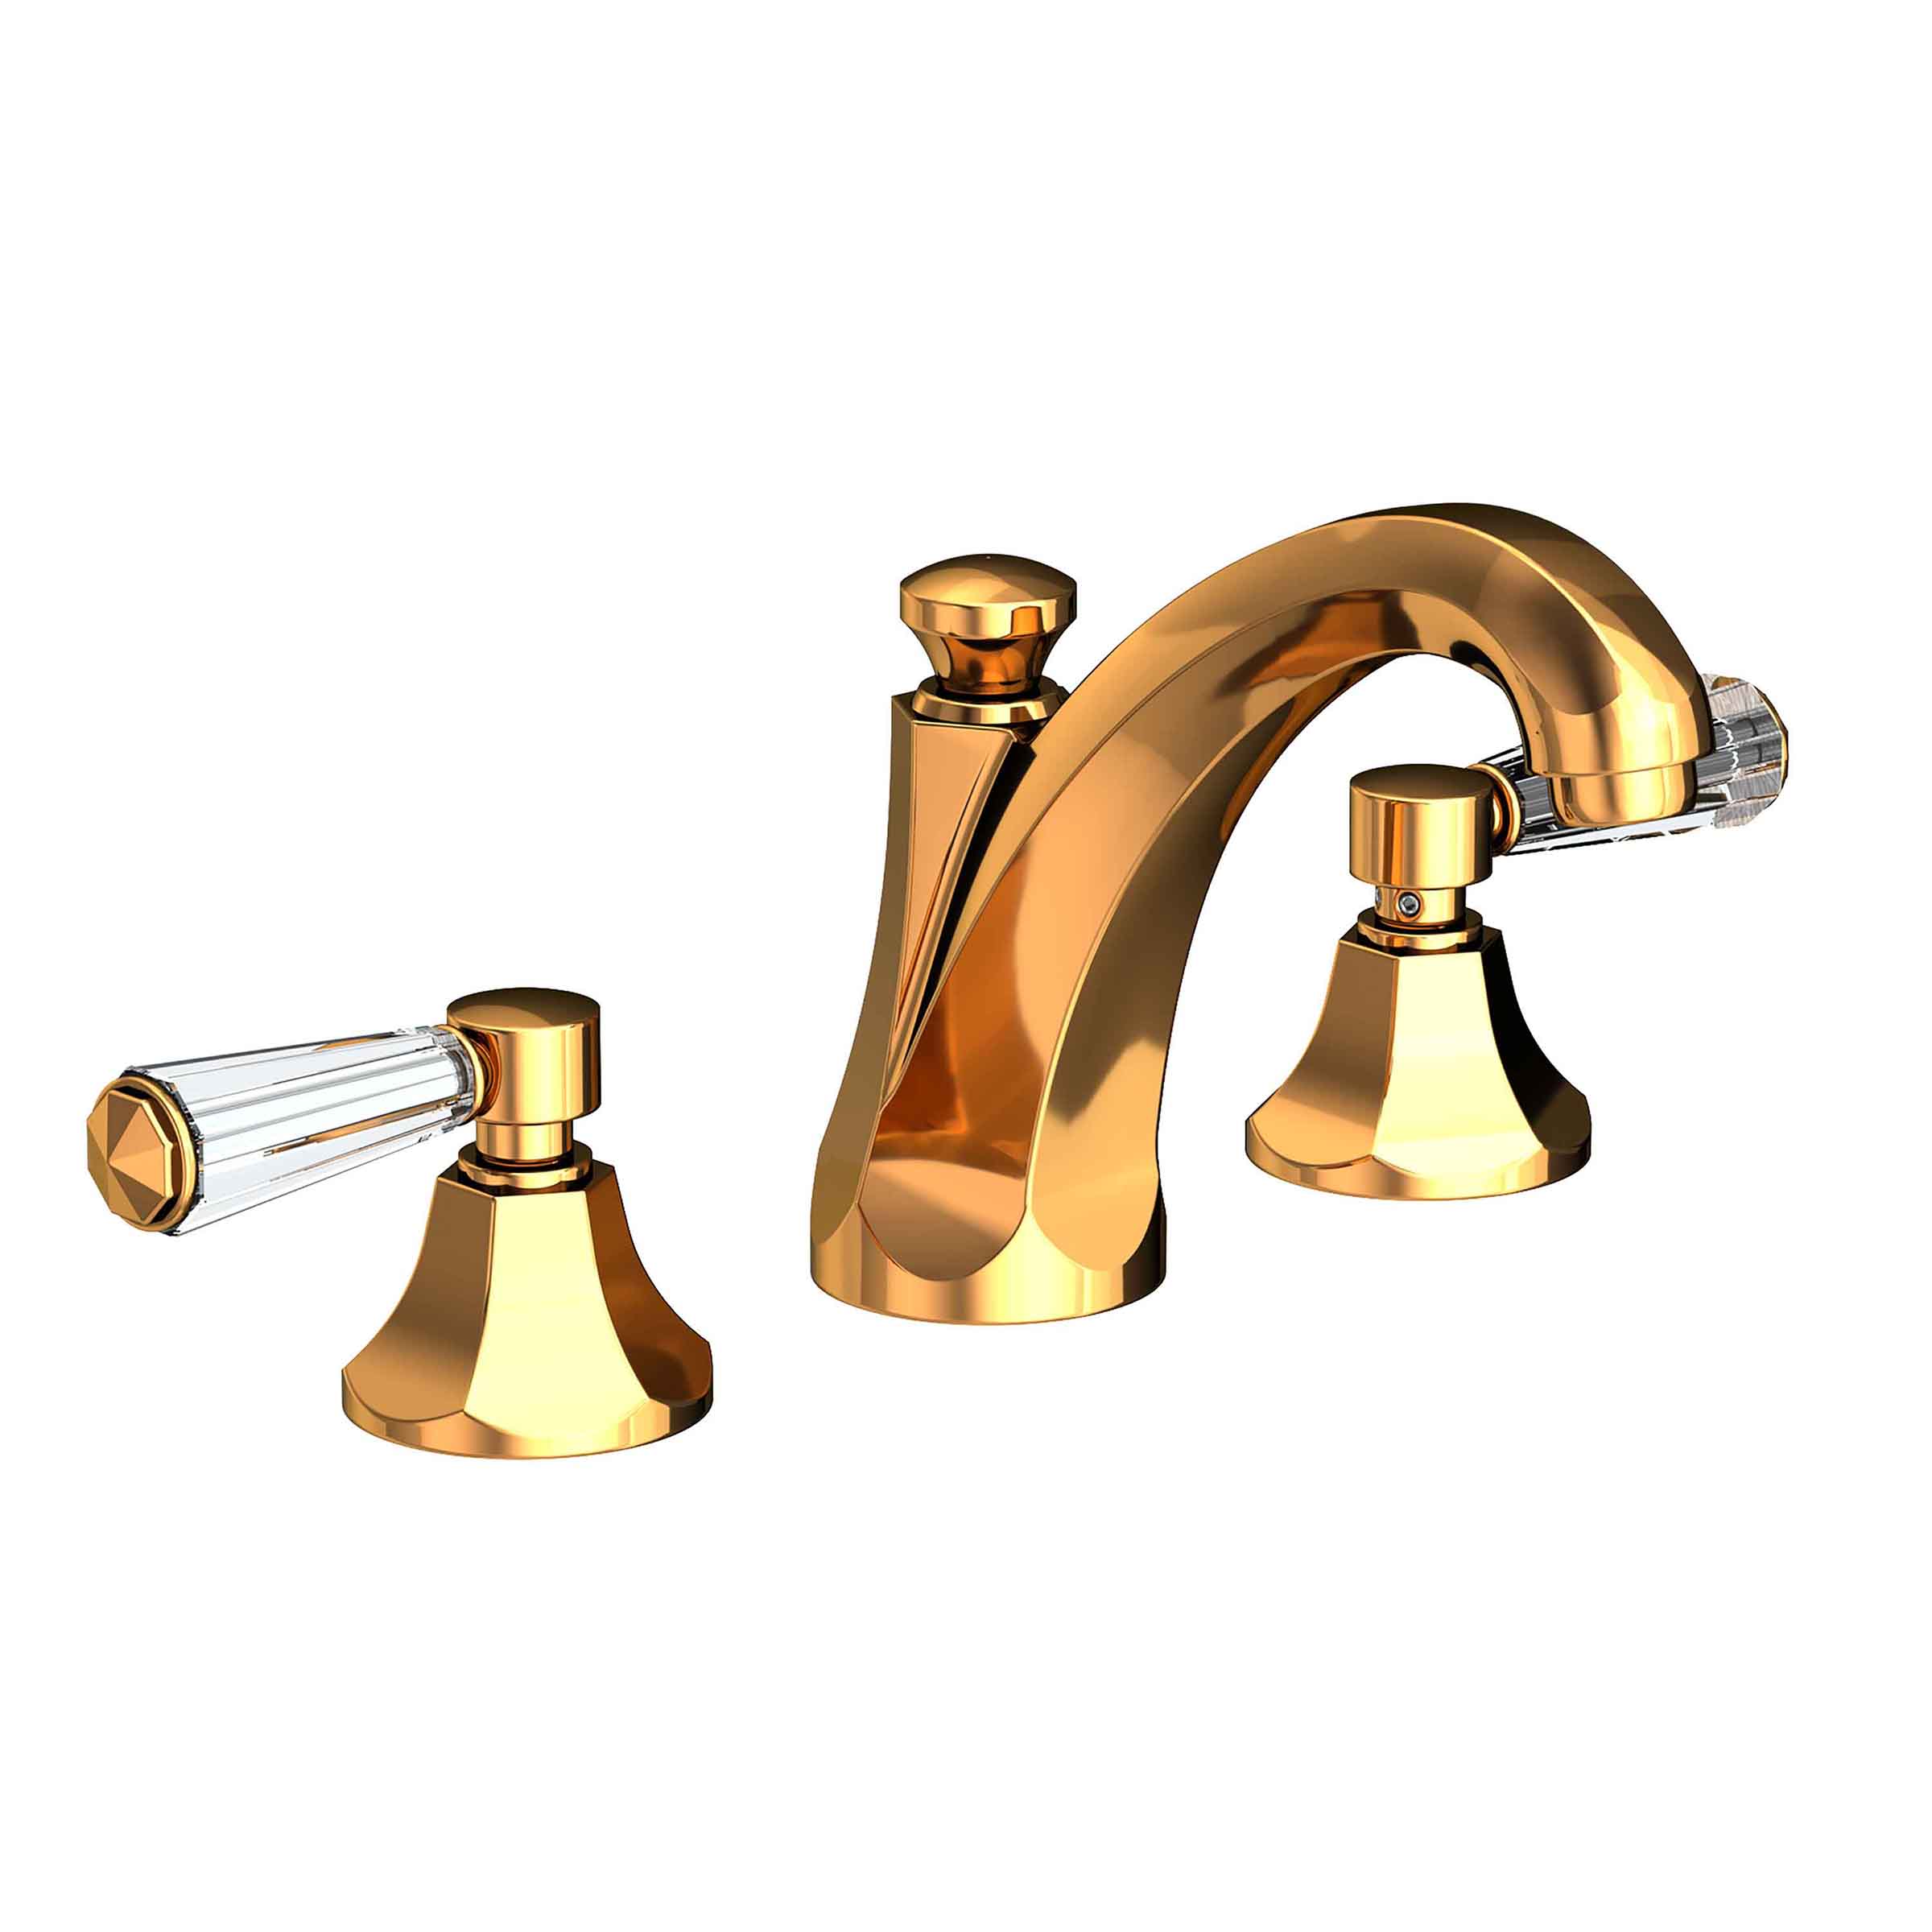 Newport Brass Metropole Widespread Lavatory Faucet